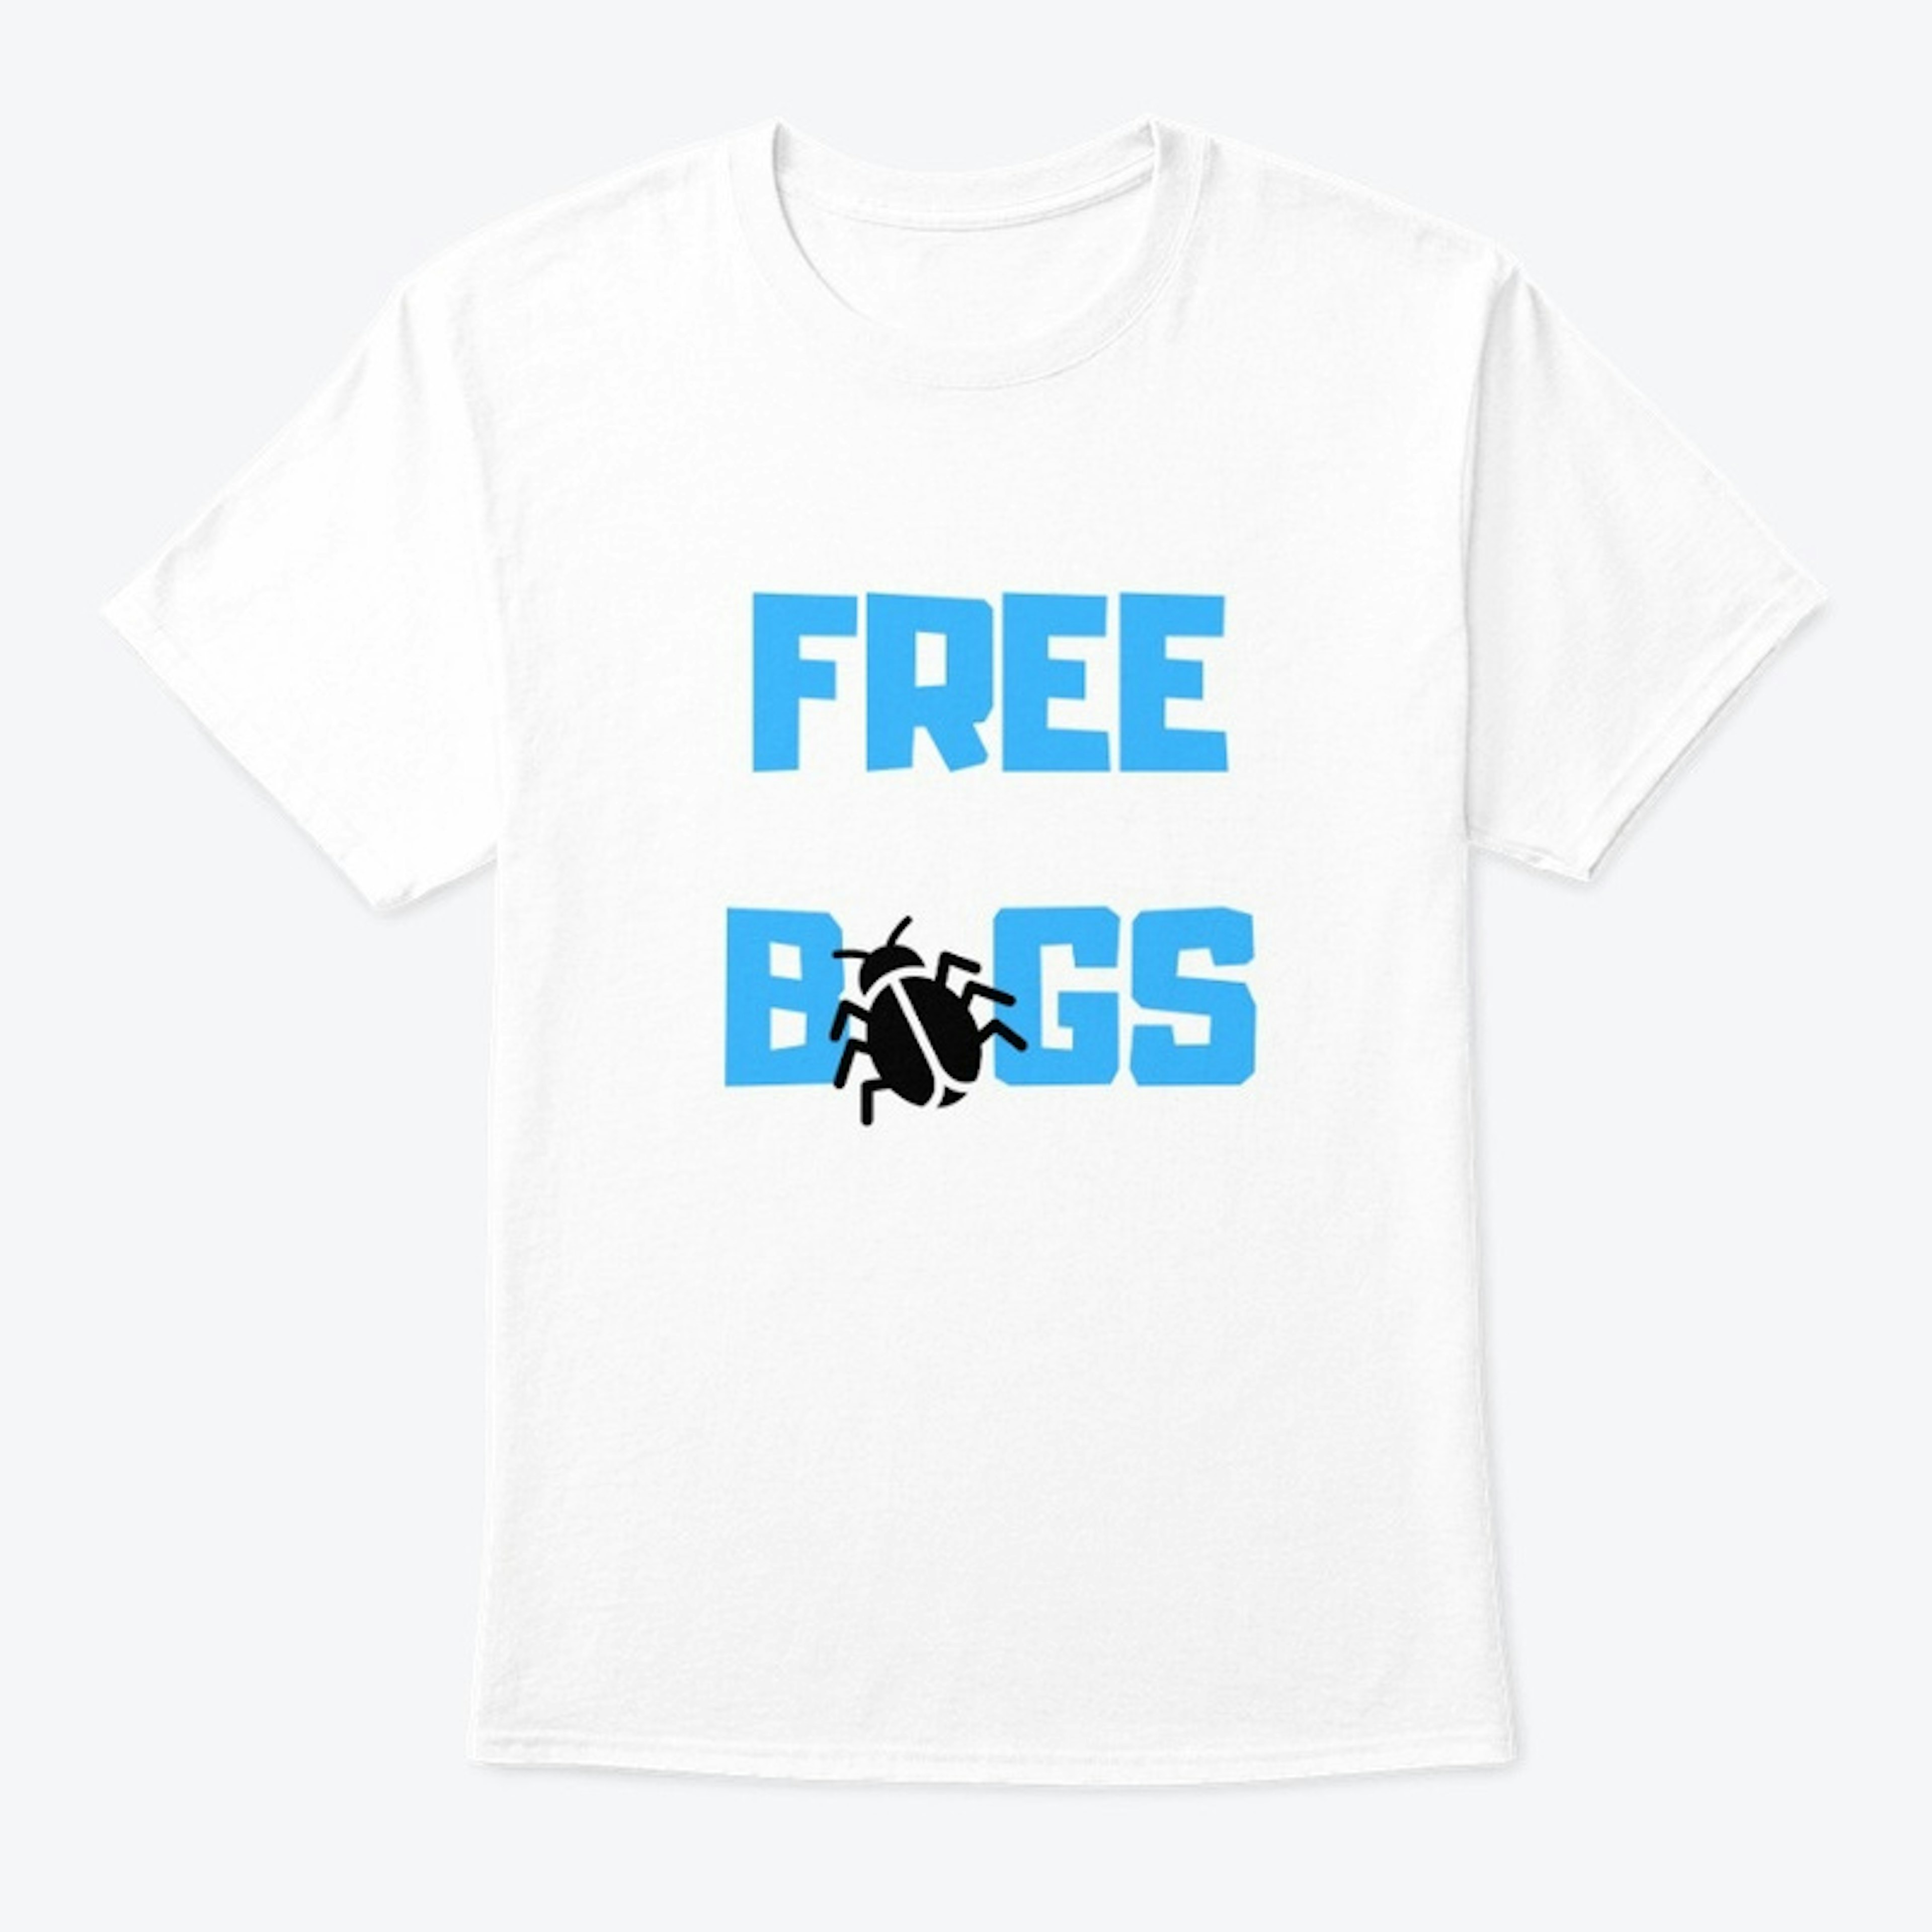 Free bugs